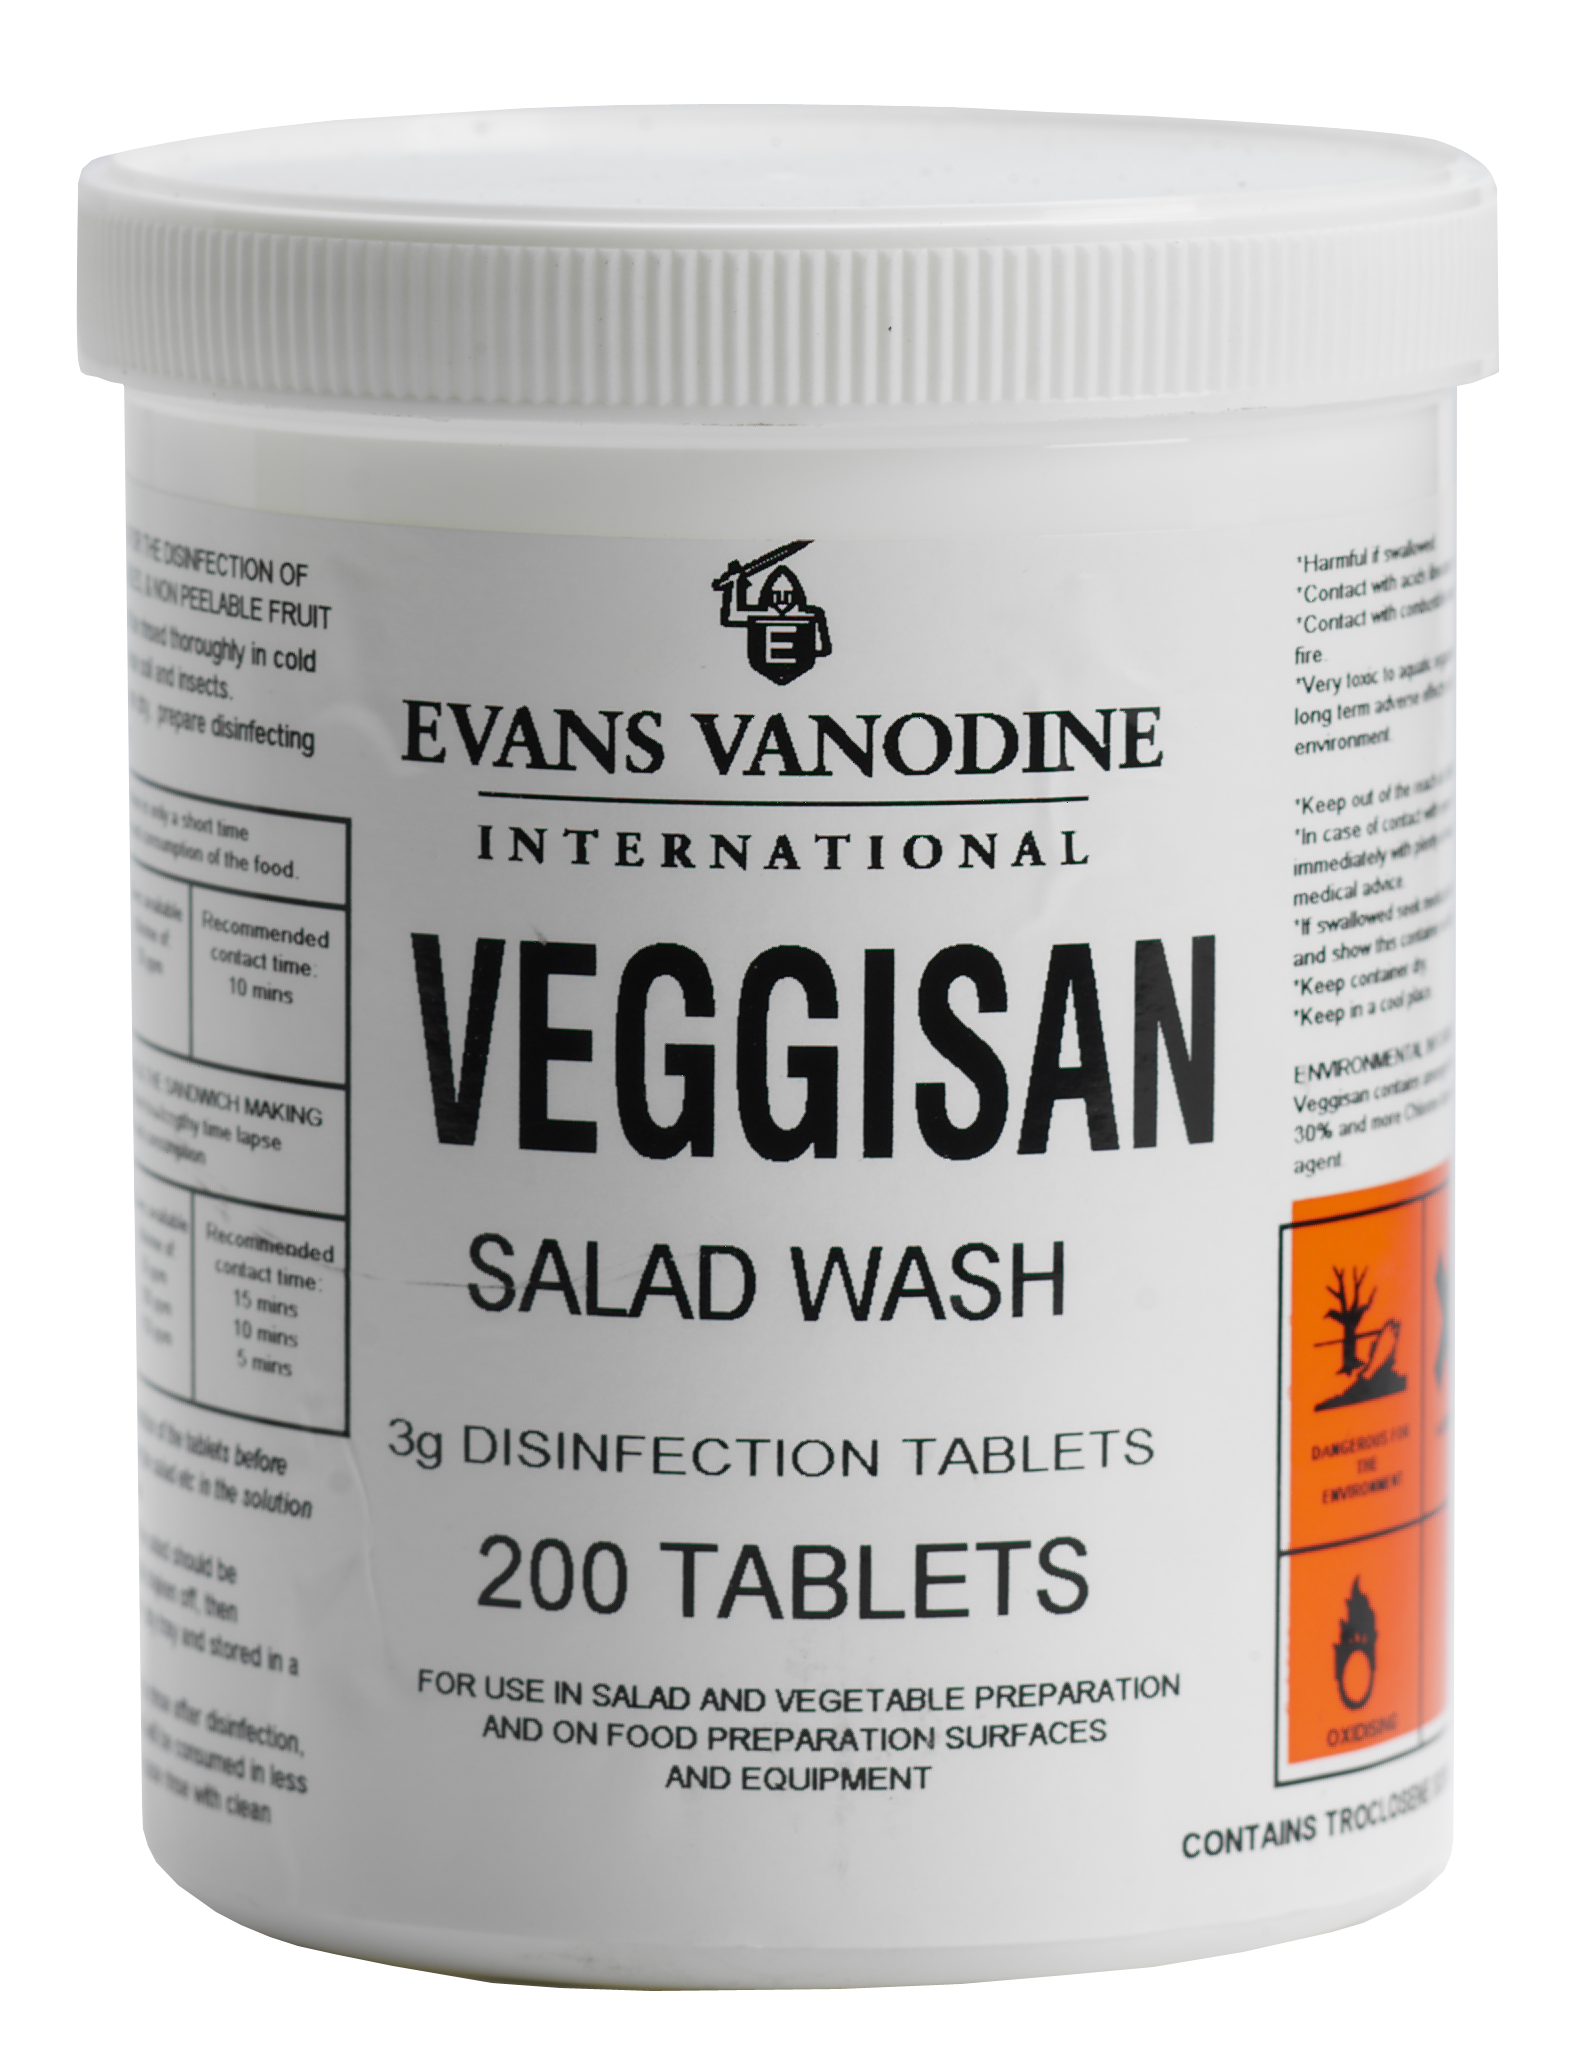 Evans Veggisan Salad Wash Disinfection Tablets